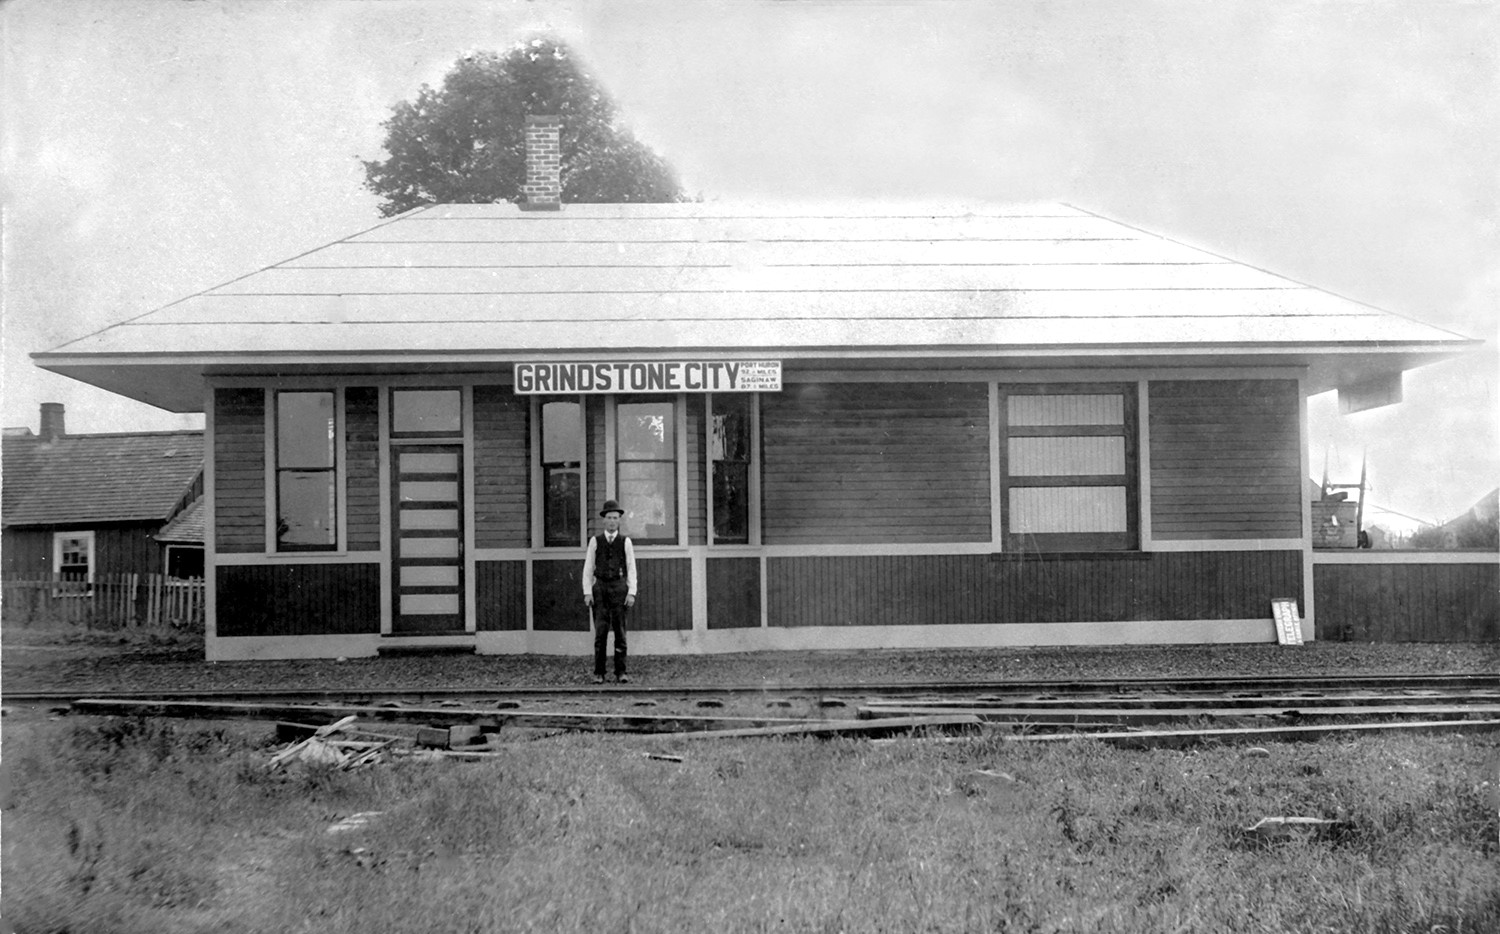 PM Grindstone City depot